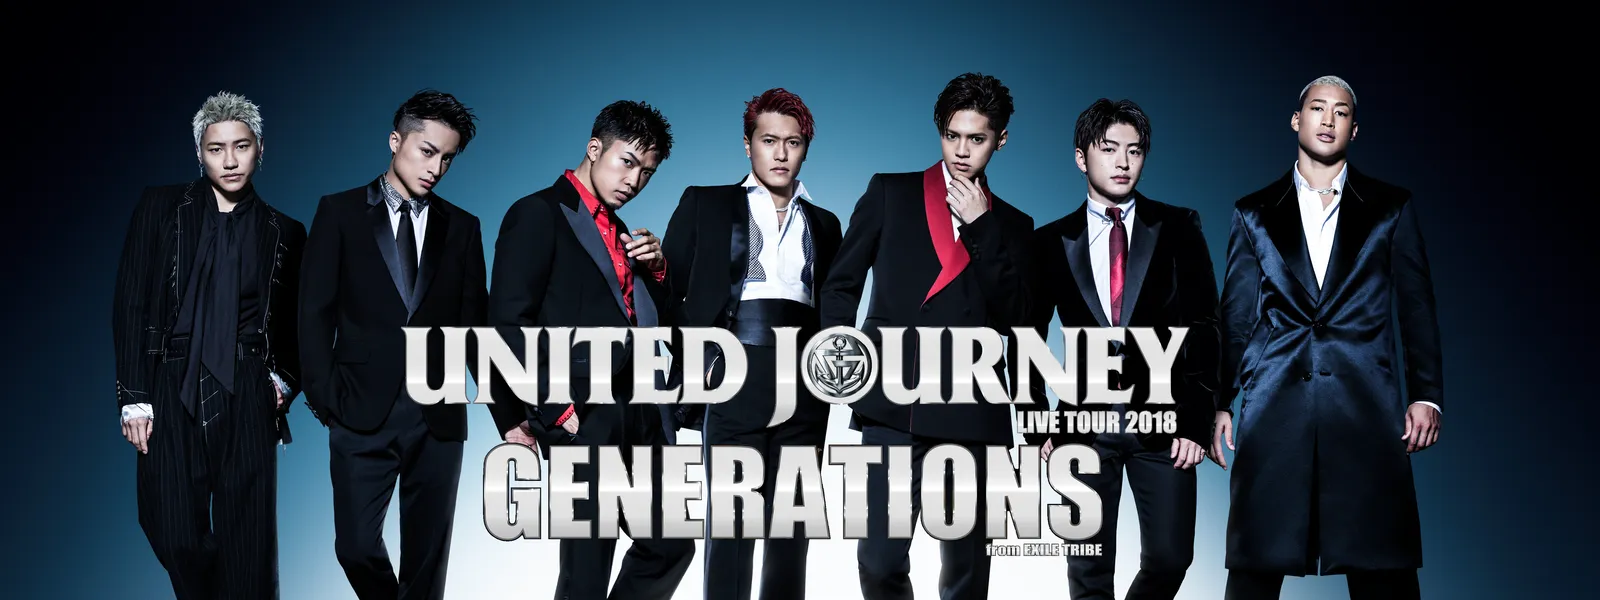 GENERATIONS LIVE TOUR 2018 UNITED JOURNE